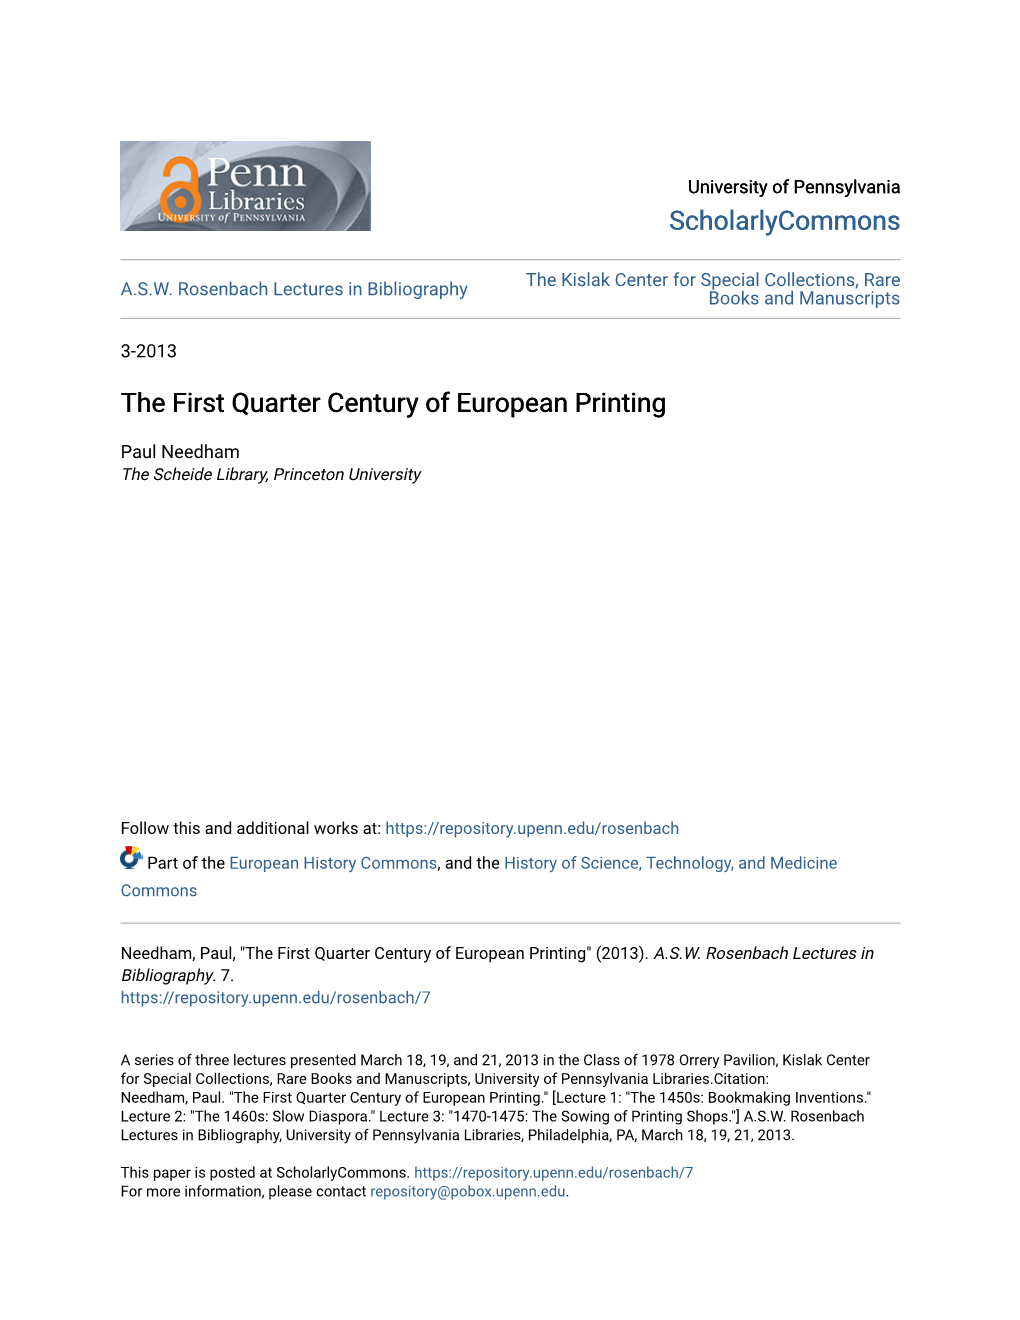 The First Quarter Century of European Printing